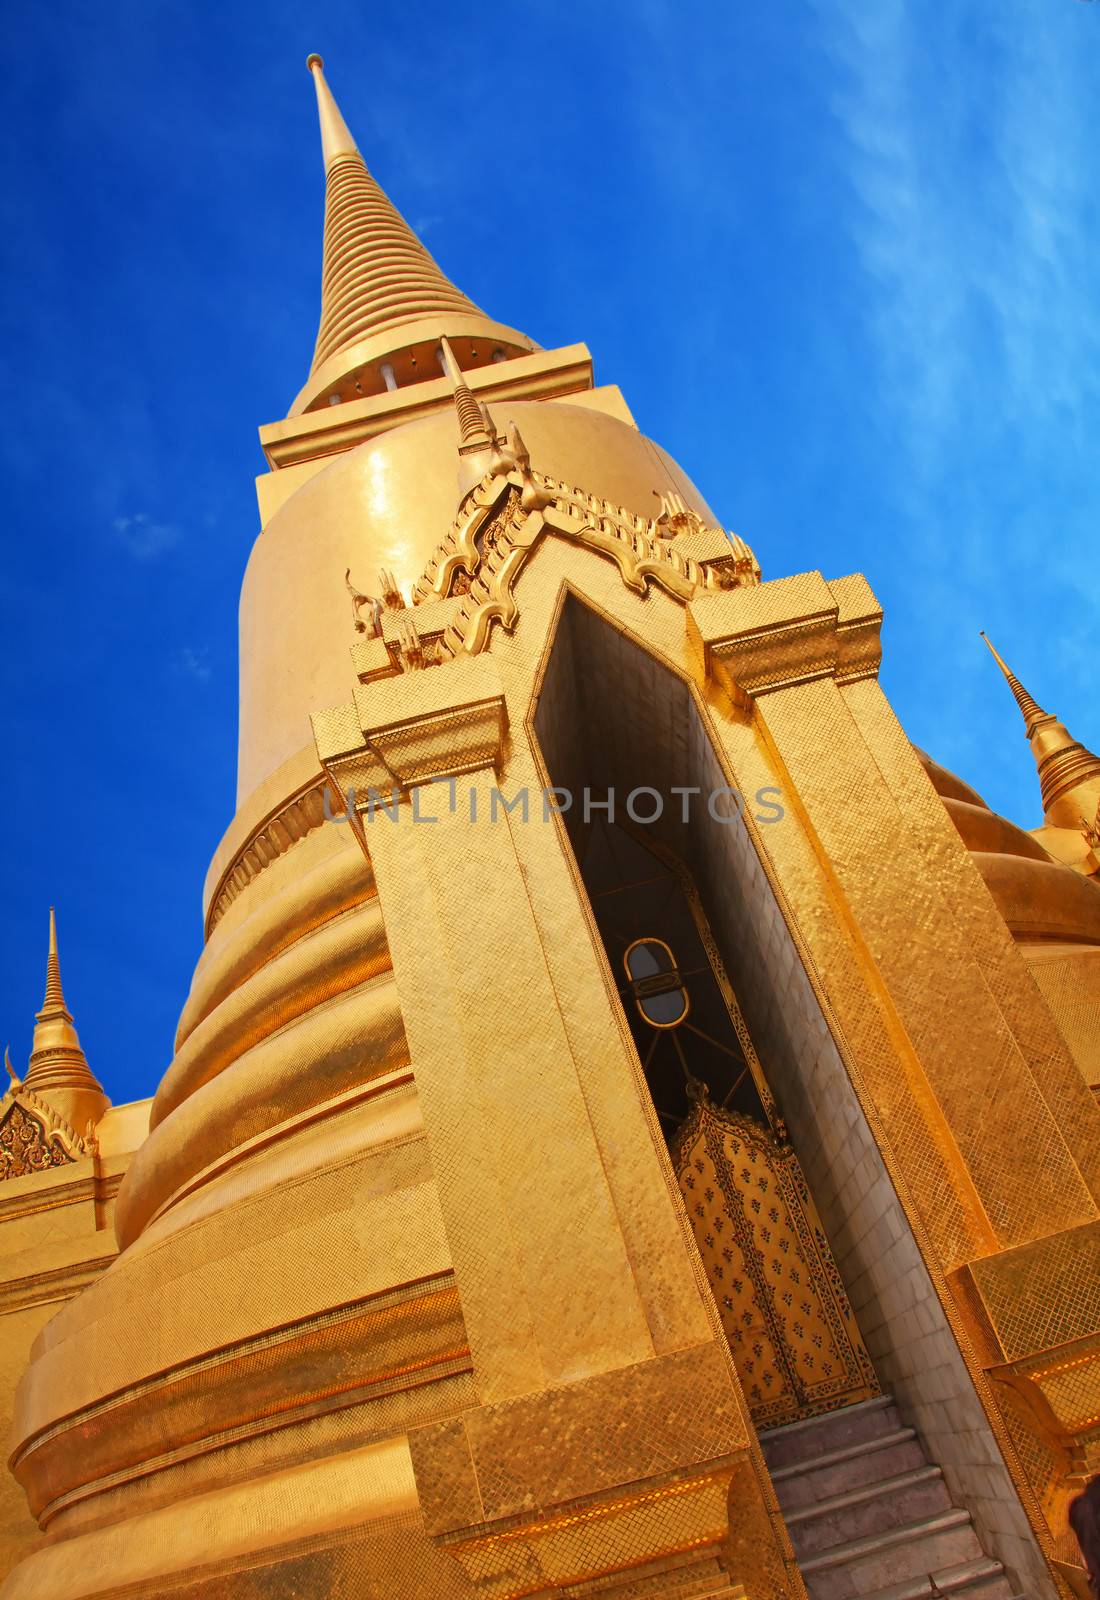 Grand Palace, Bangkok, Thailand by swisshippo